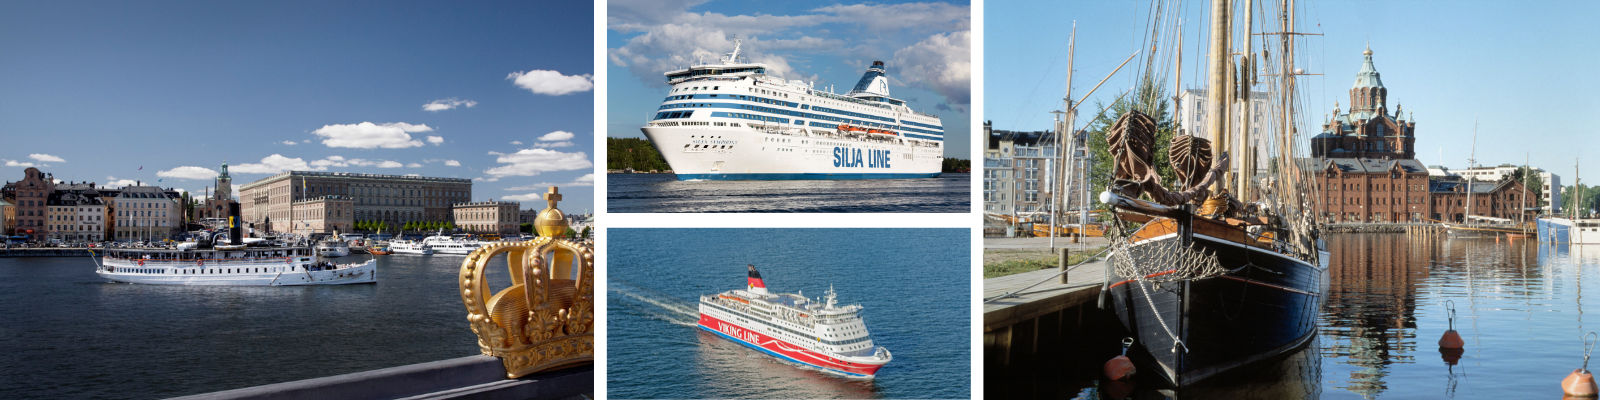 croisiere mer baltique stockholm helsinki capitales nordiques voyages o-nord